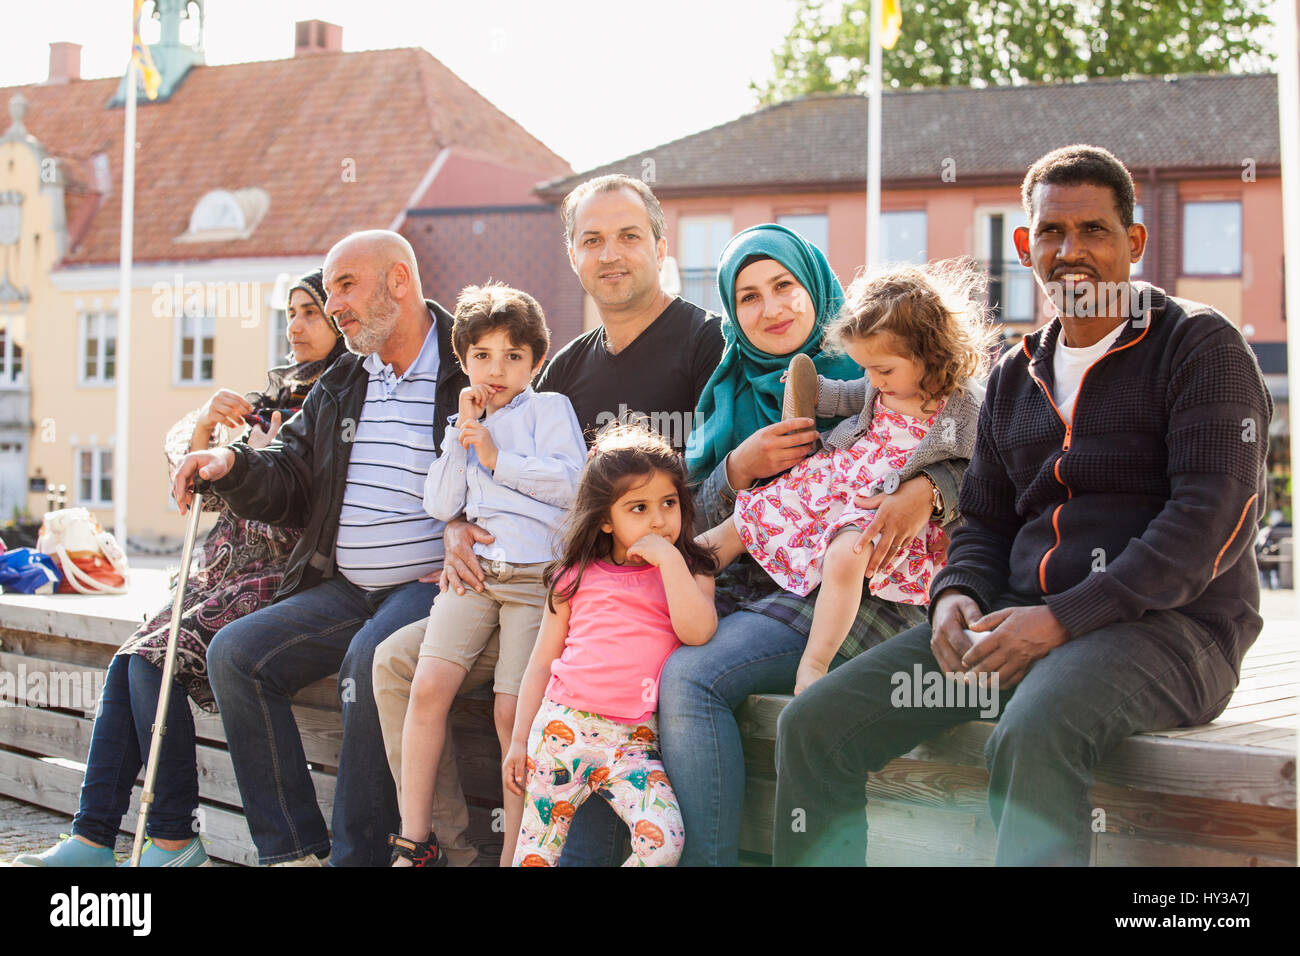 Sweden, Blekinge, Solvesborg, Portrait of family with children (2-3, 4-5, 6-7) sitting on brick wall Stock Photo